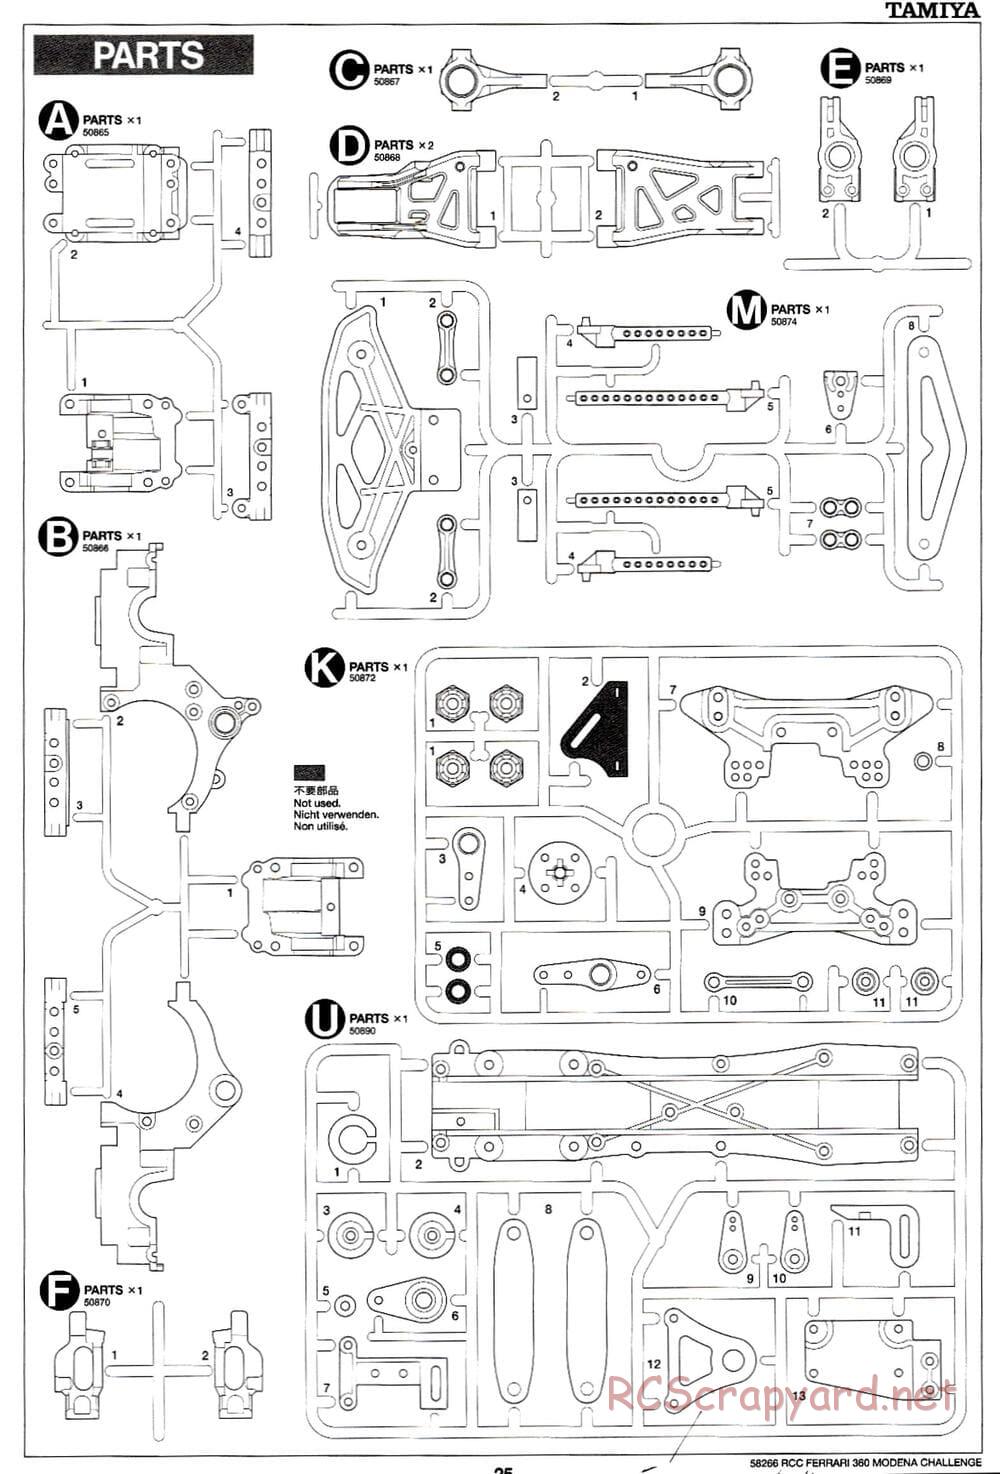 Tamiya - Ferrari 360 Modena Challenge - TA-04 Chassis - Manual - Page 25